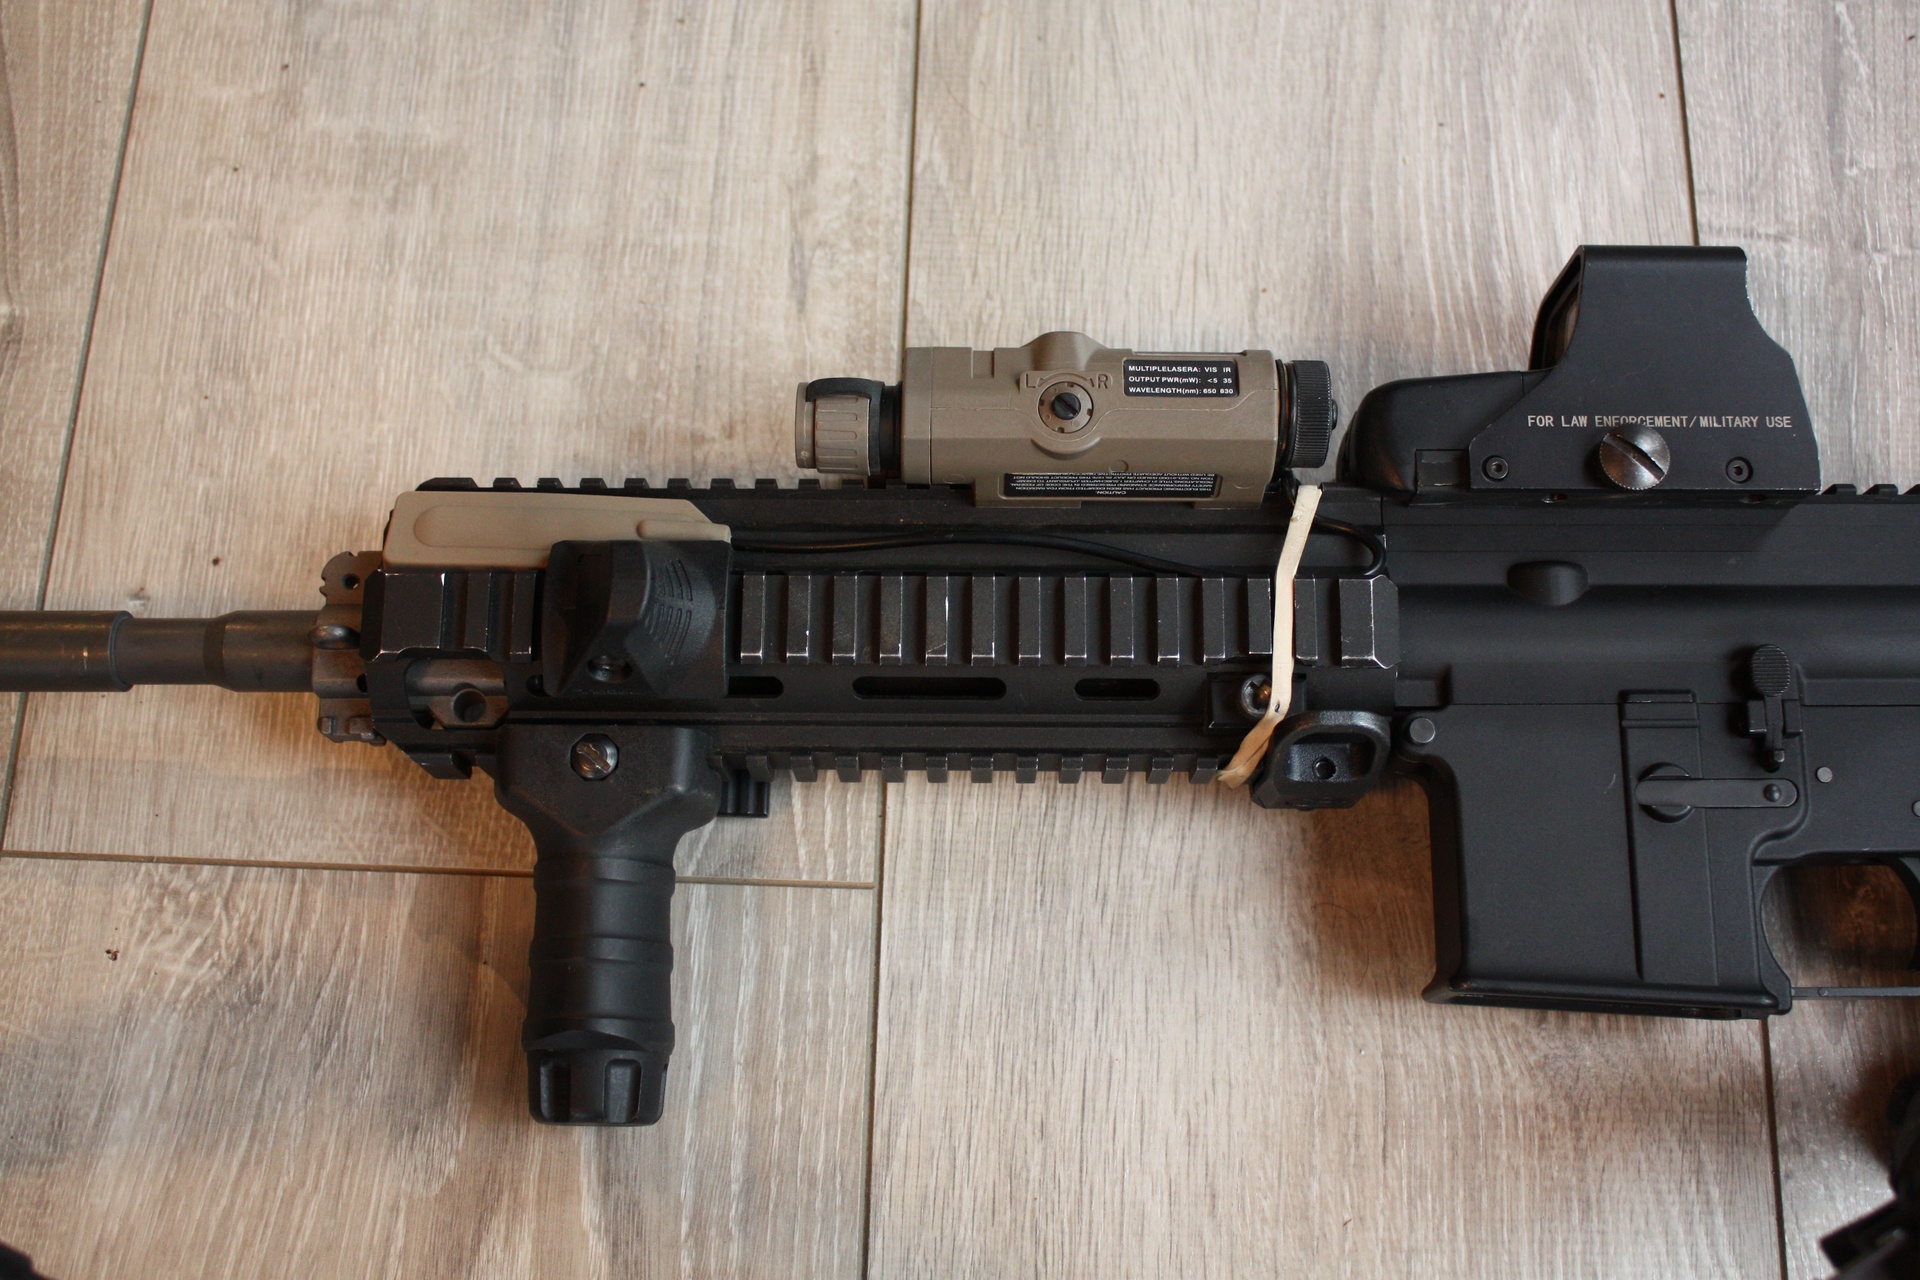 HK416 grip TD + handstop magpul.